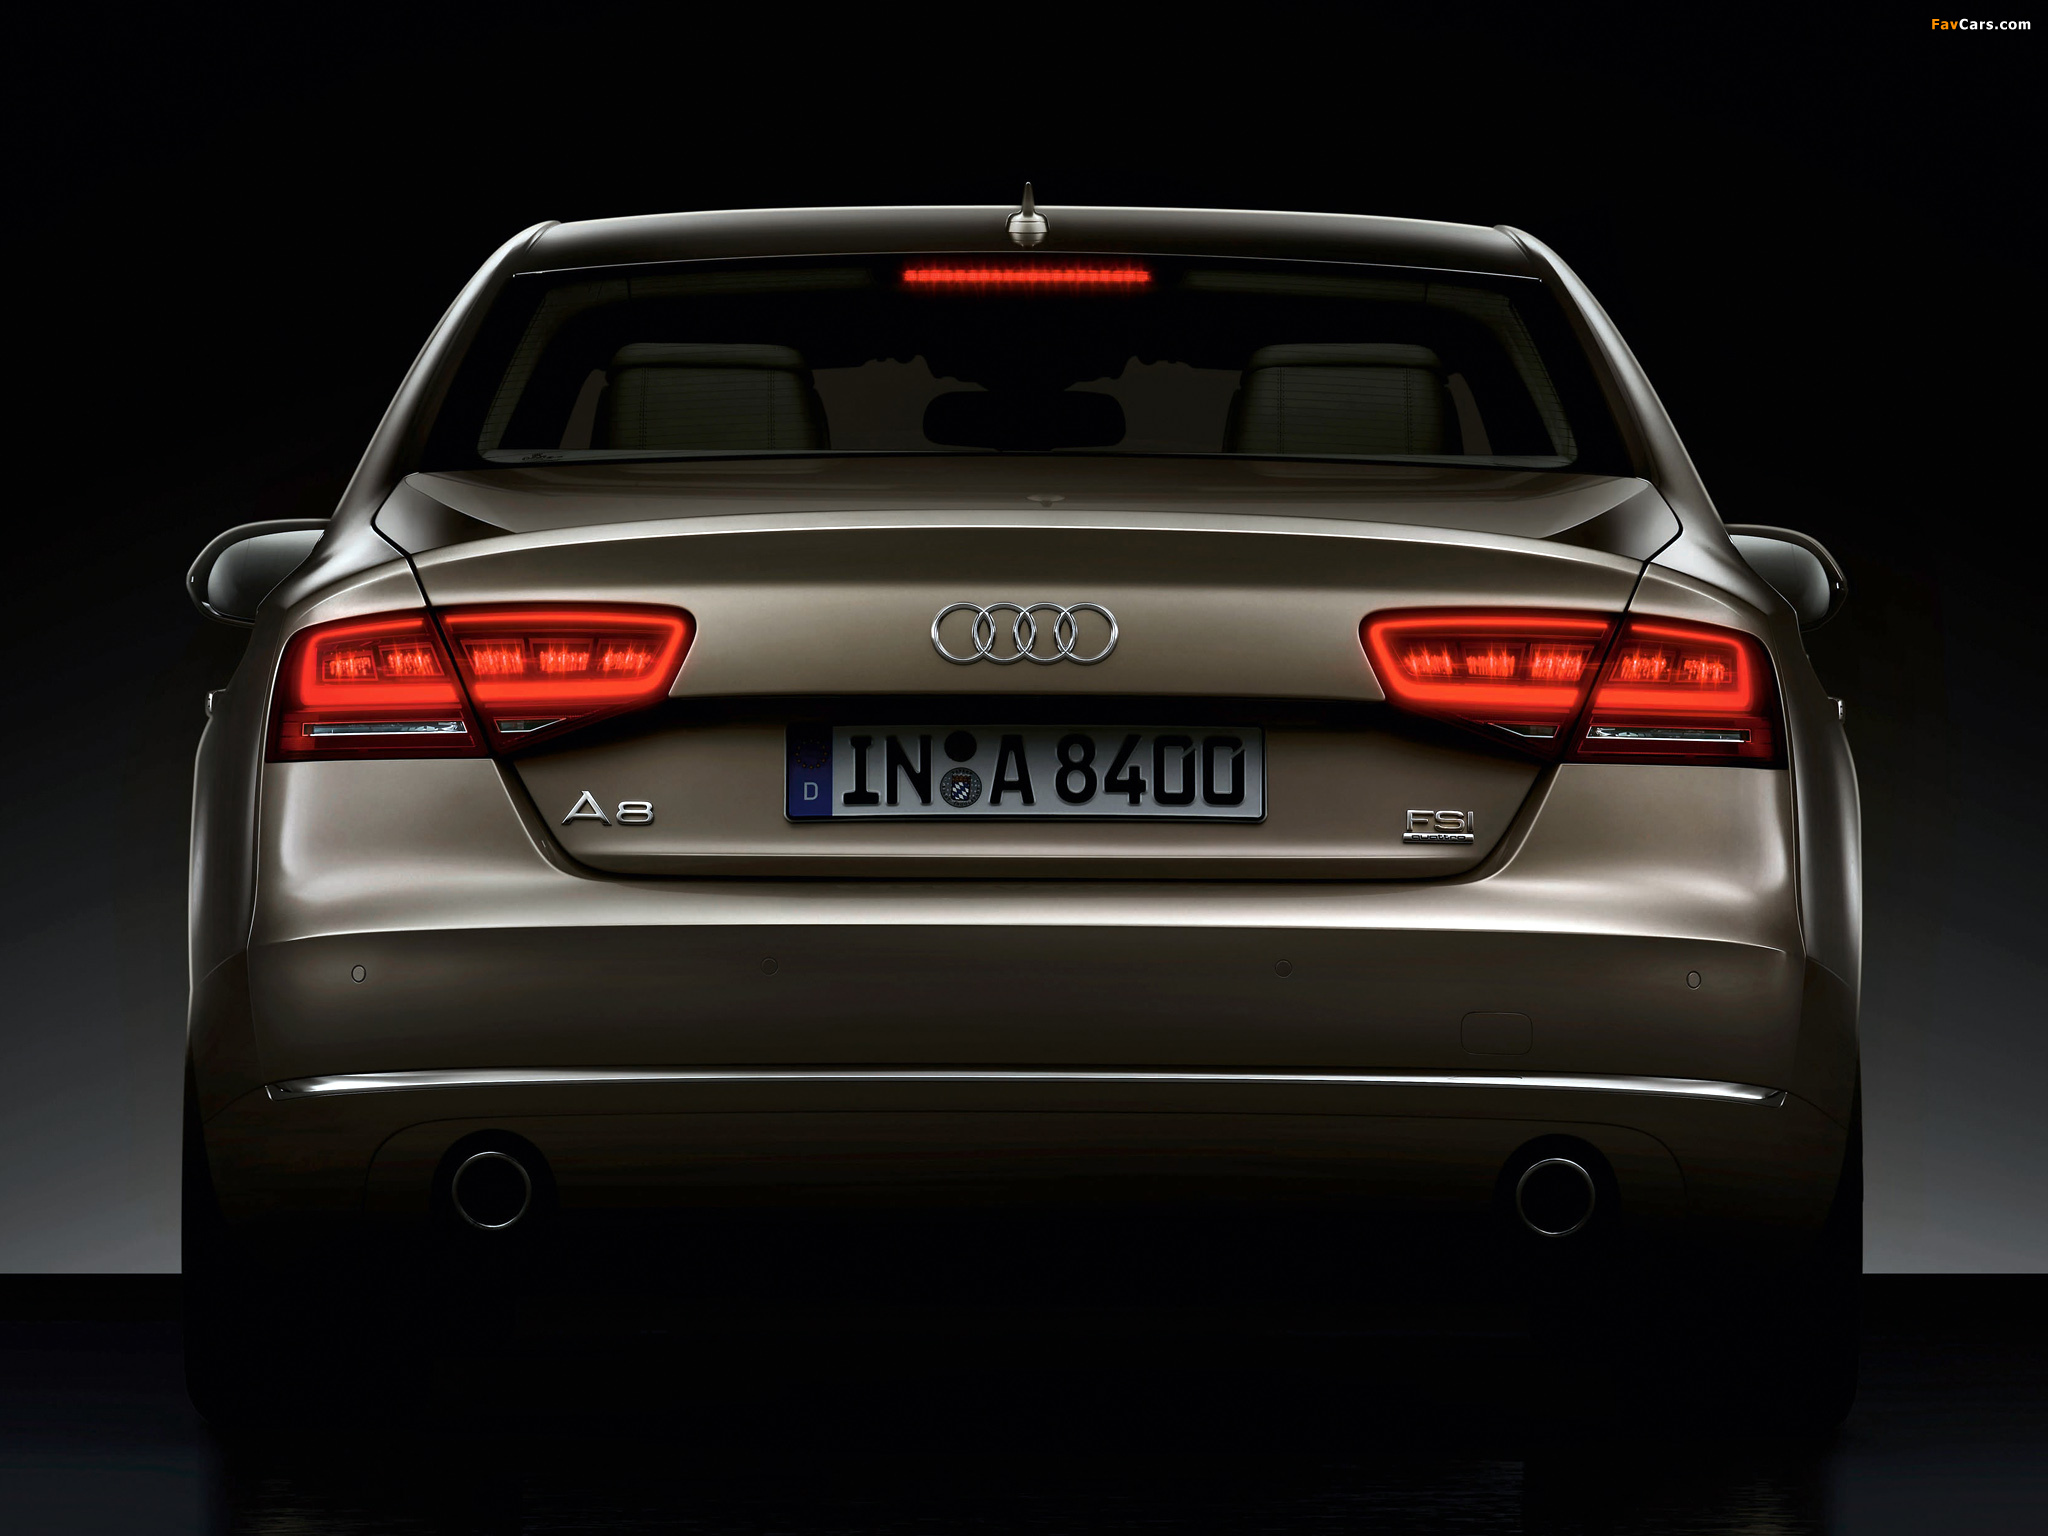 Audi A8 4.2 FSI quattro (D4) 2010 pictures (2048 x 1536)